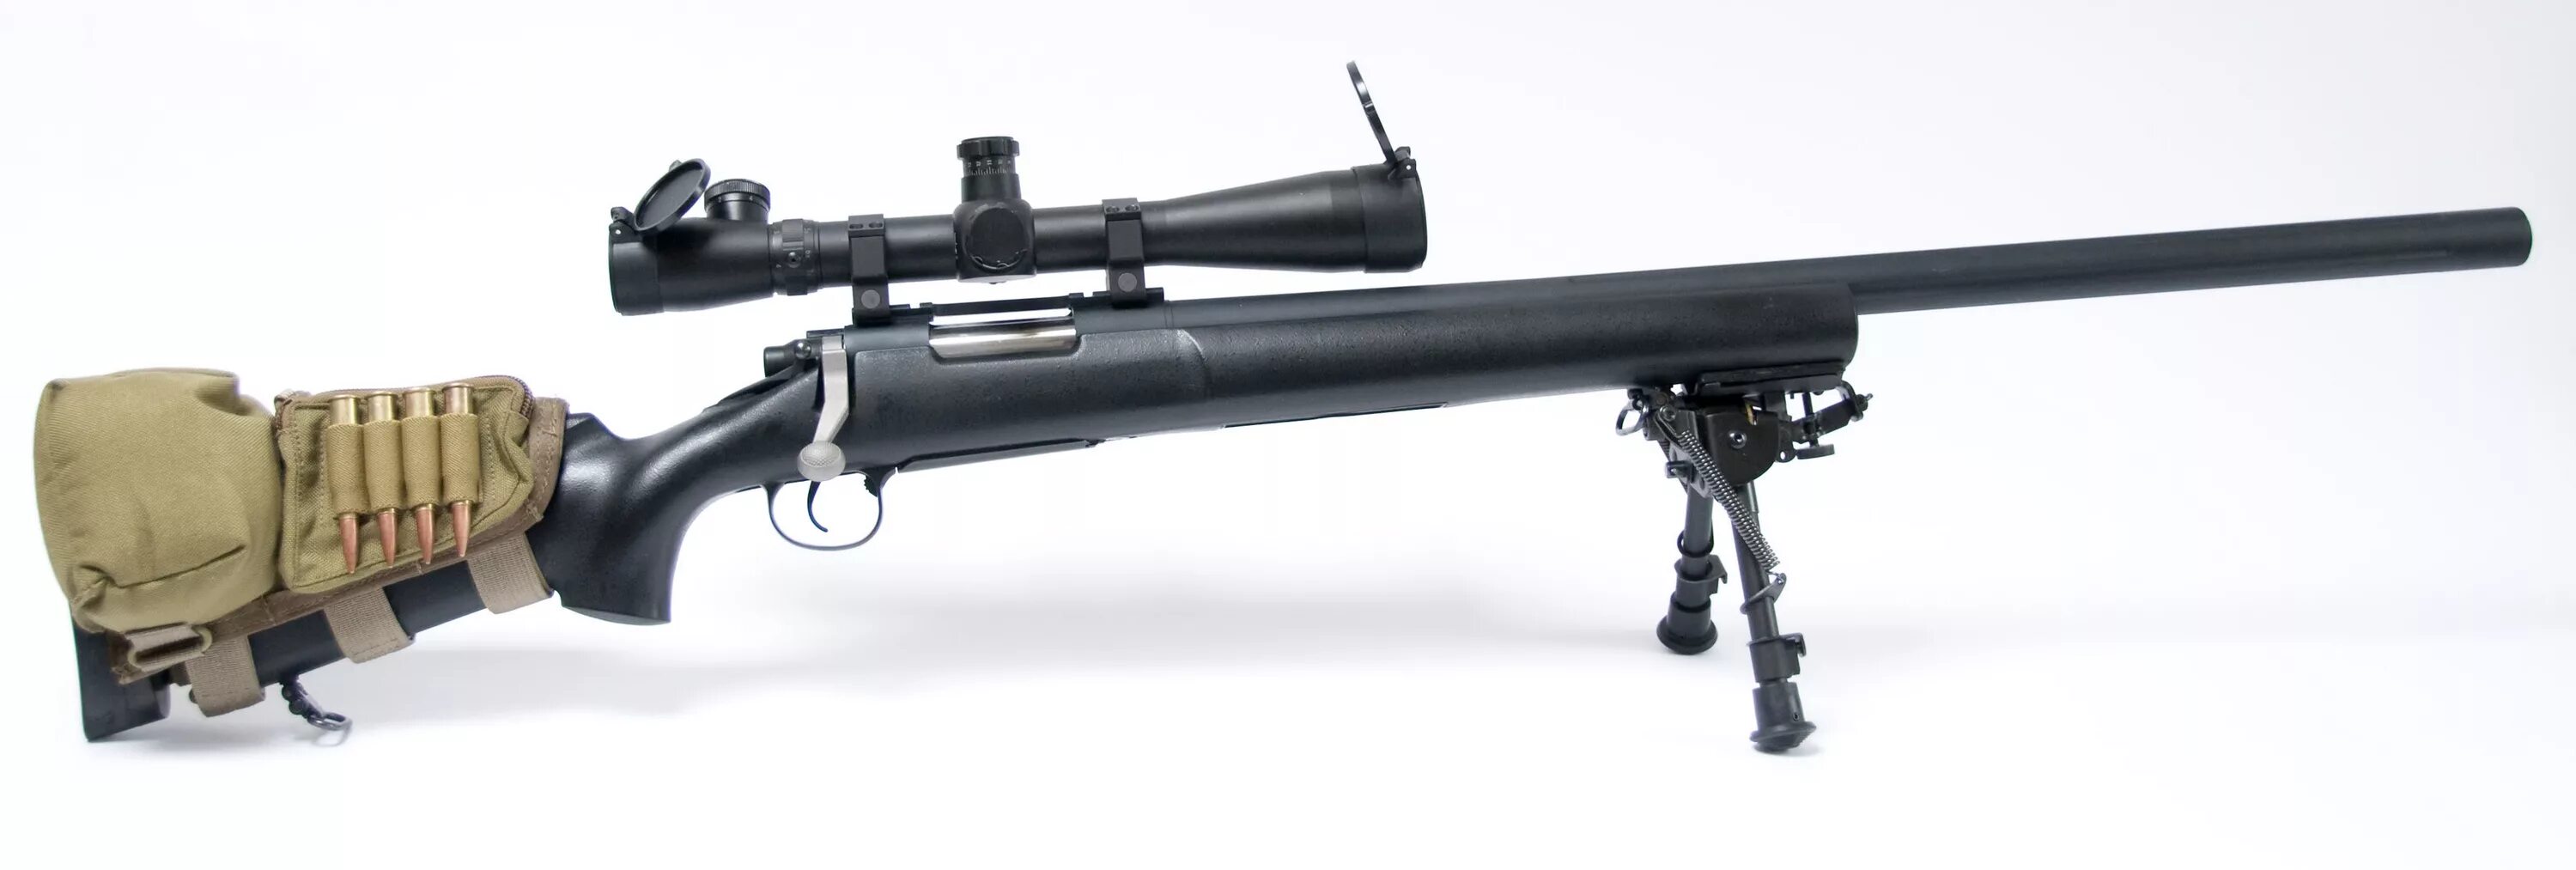 М 24. M24 снайперская винтовка. Снайперская винтовка Remington m24. Remington 700 m24. M24 SWS винтовка.